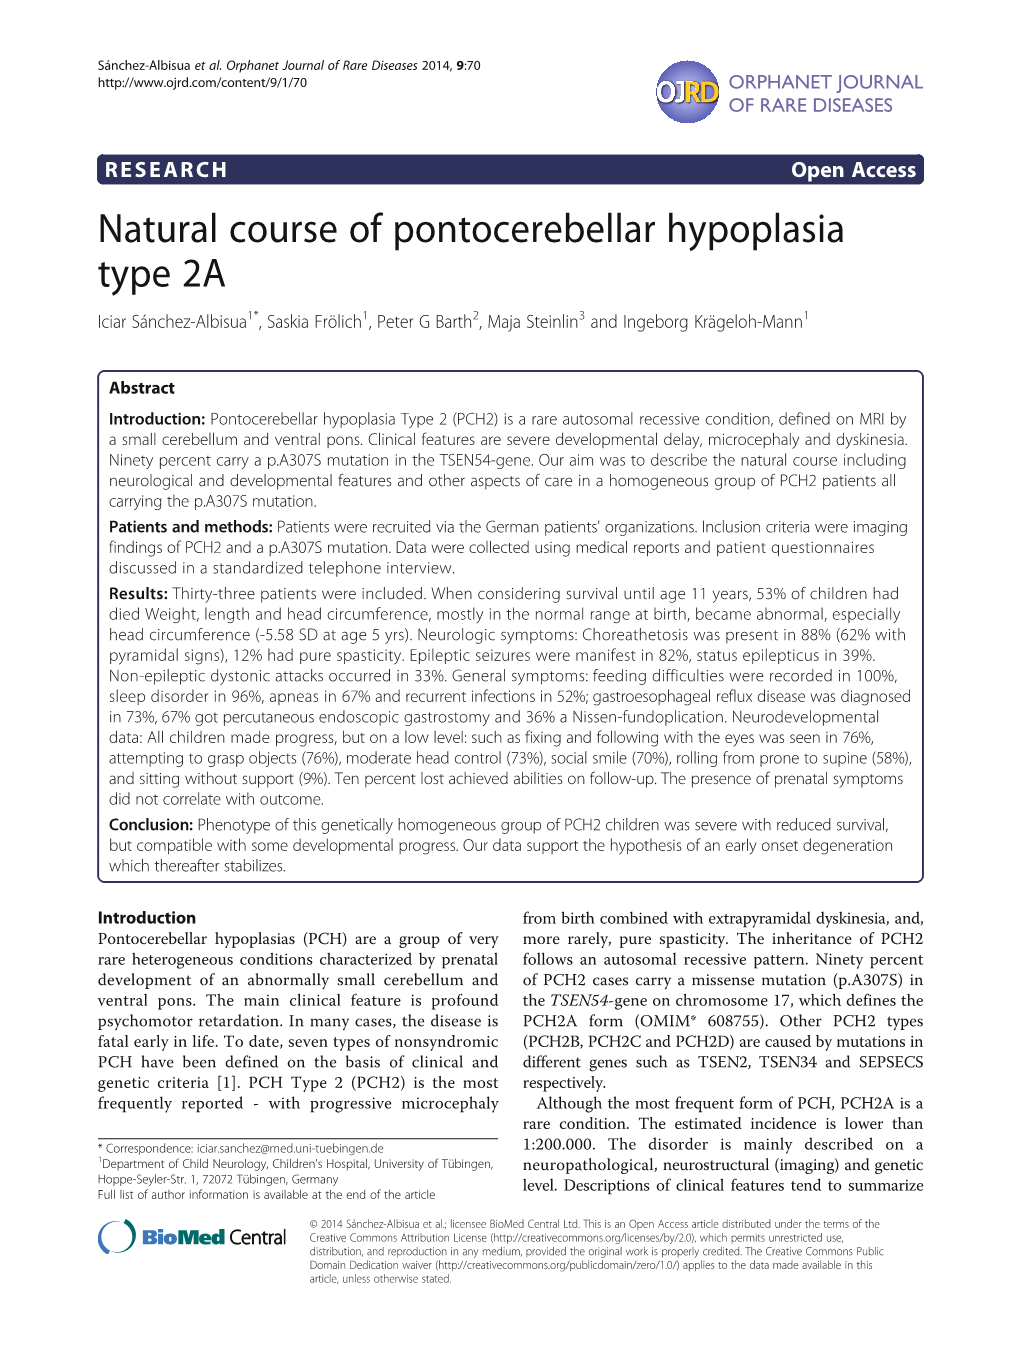 Natural Course of Pontocerebellar Hypoplasia Type 2A Iciar Sánchez-Albisua1*, Saskia Frölich1, Peter G Barth2, Maja Steinlin3 and Ingeborg Krägeloh-Mann1